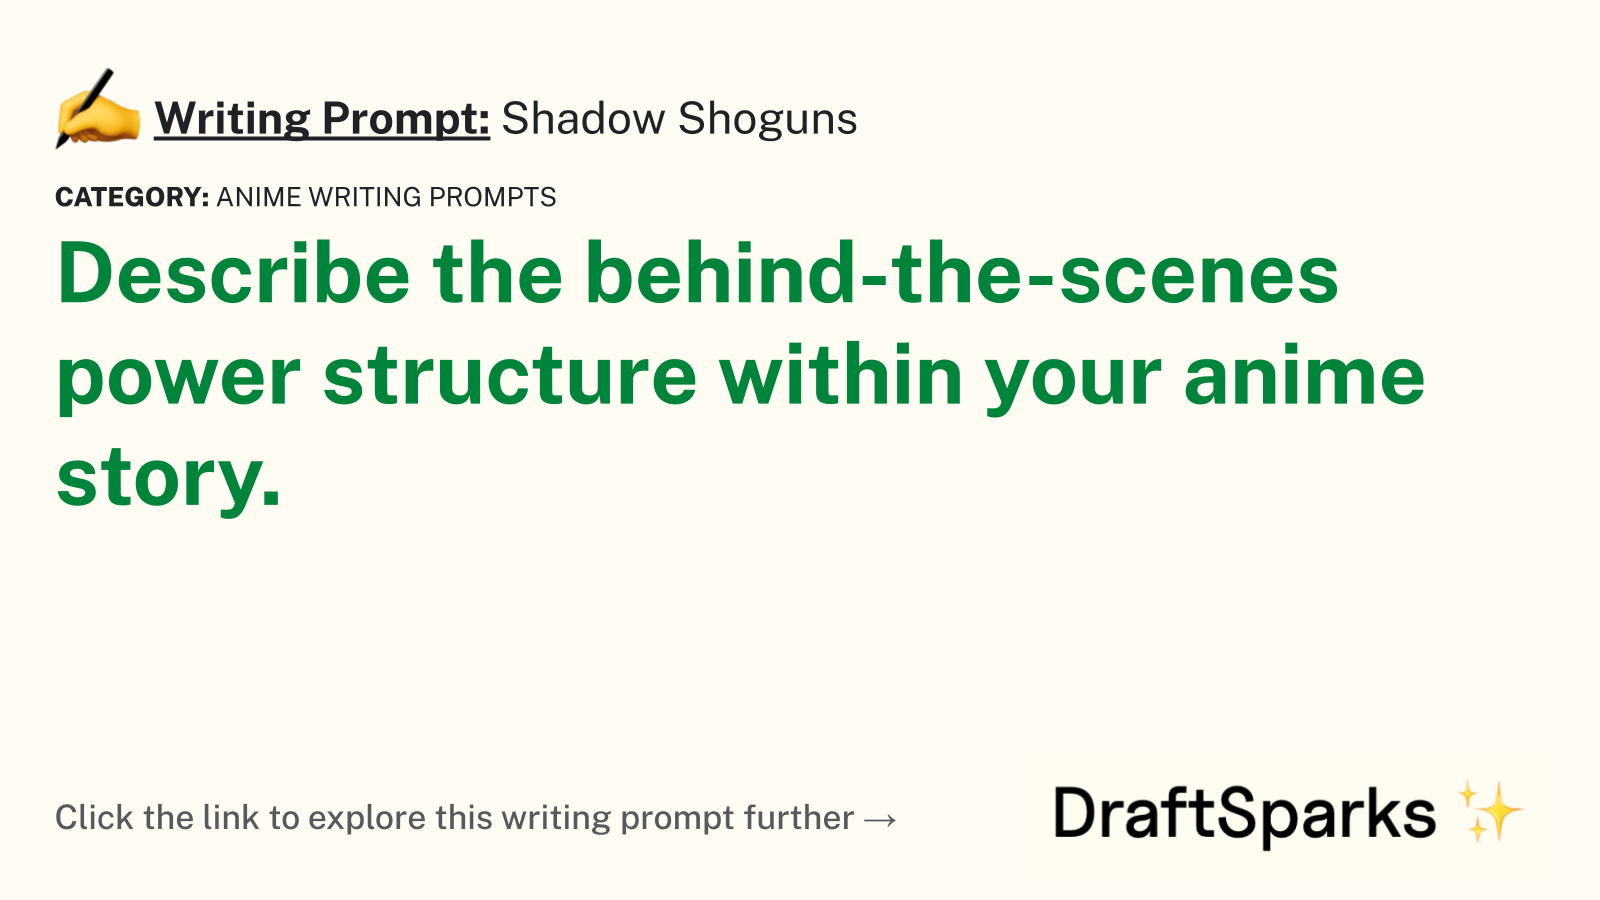 Shadow Shoguns